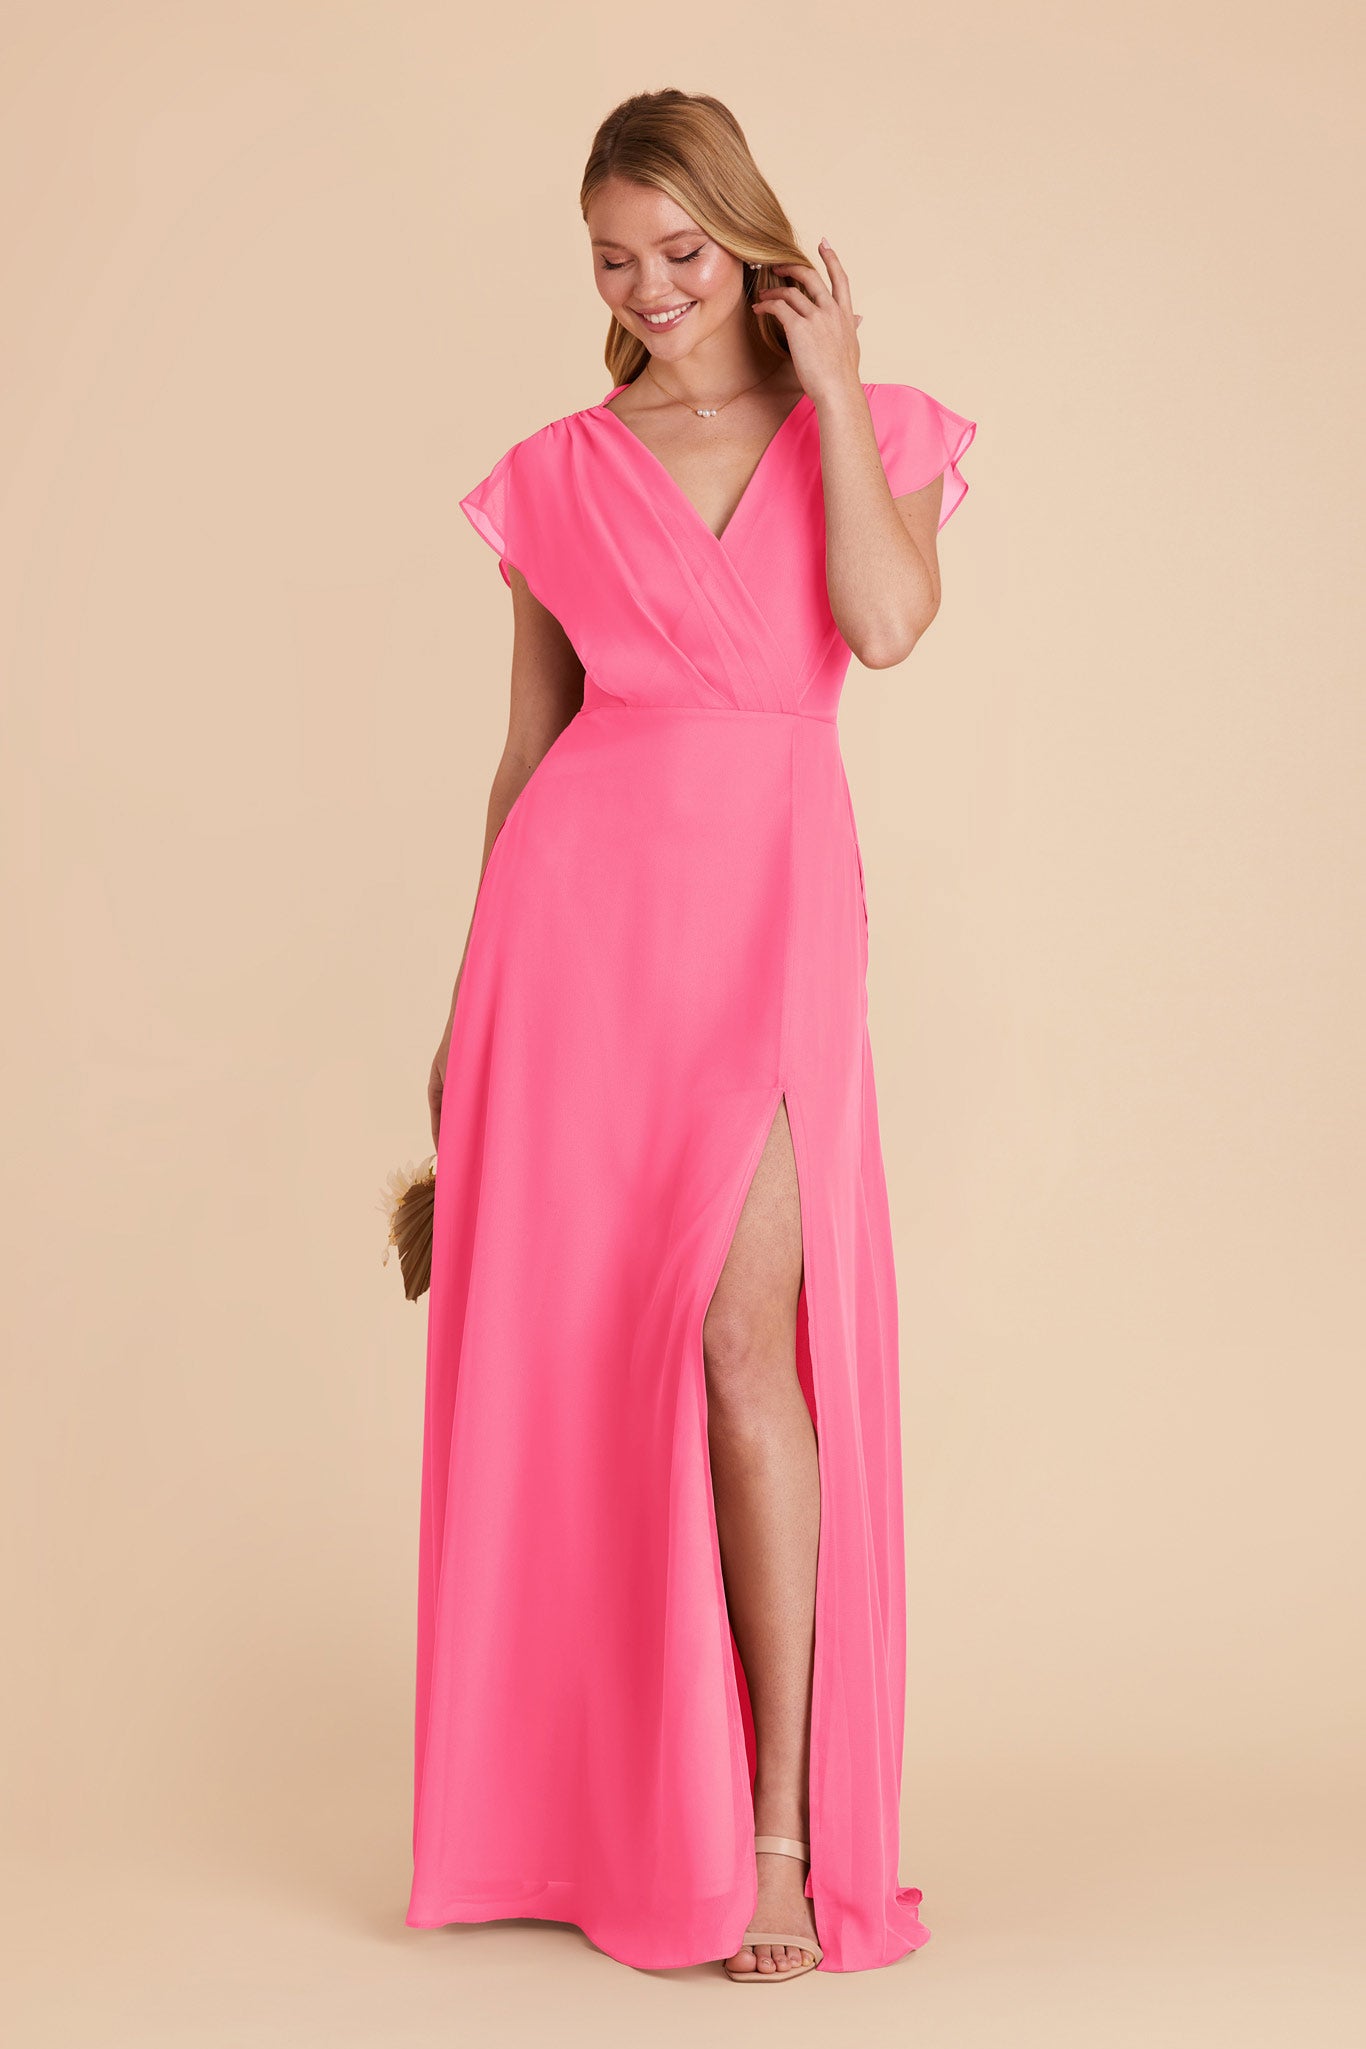 Bon Bon Pink Violet Chiffon Dress by Birdy Grey